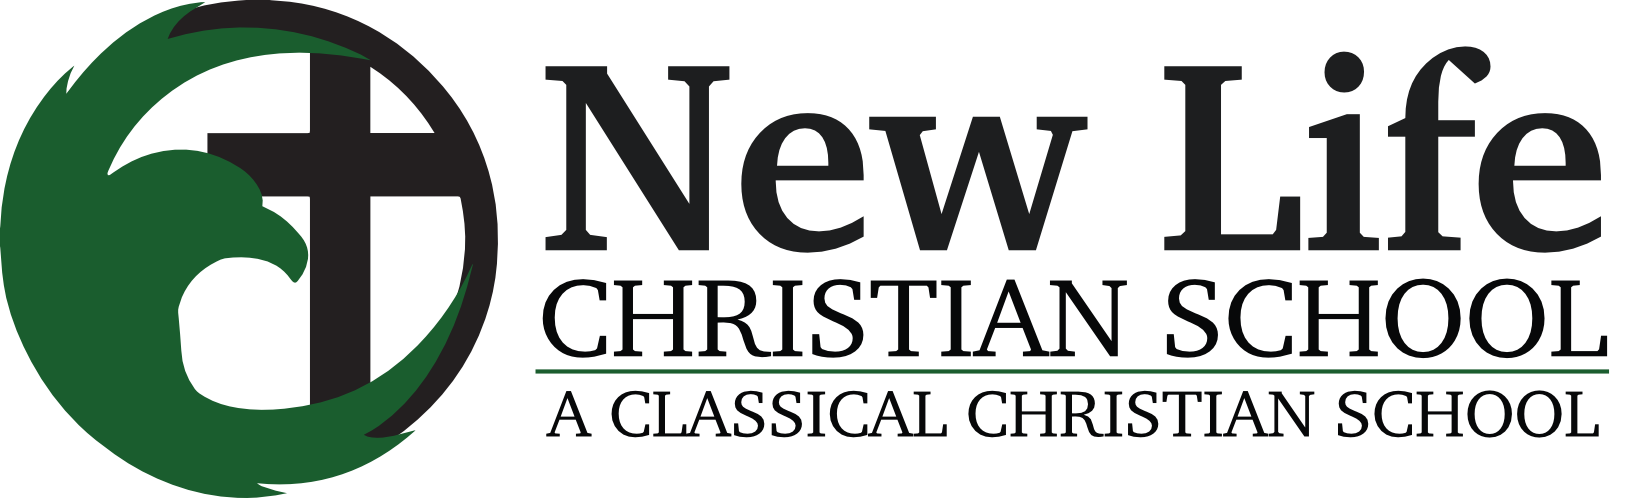 Newlifeephrata logo